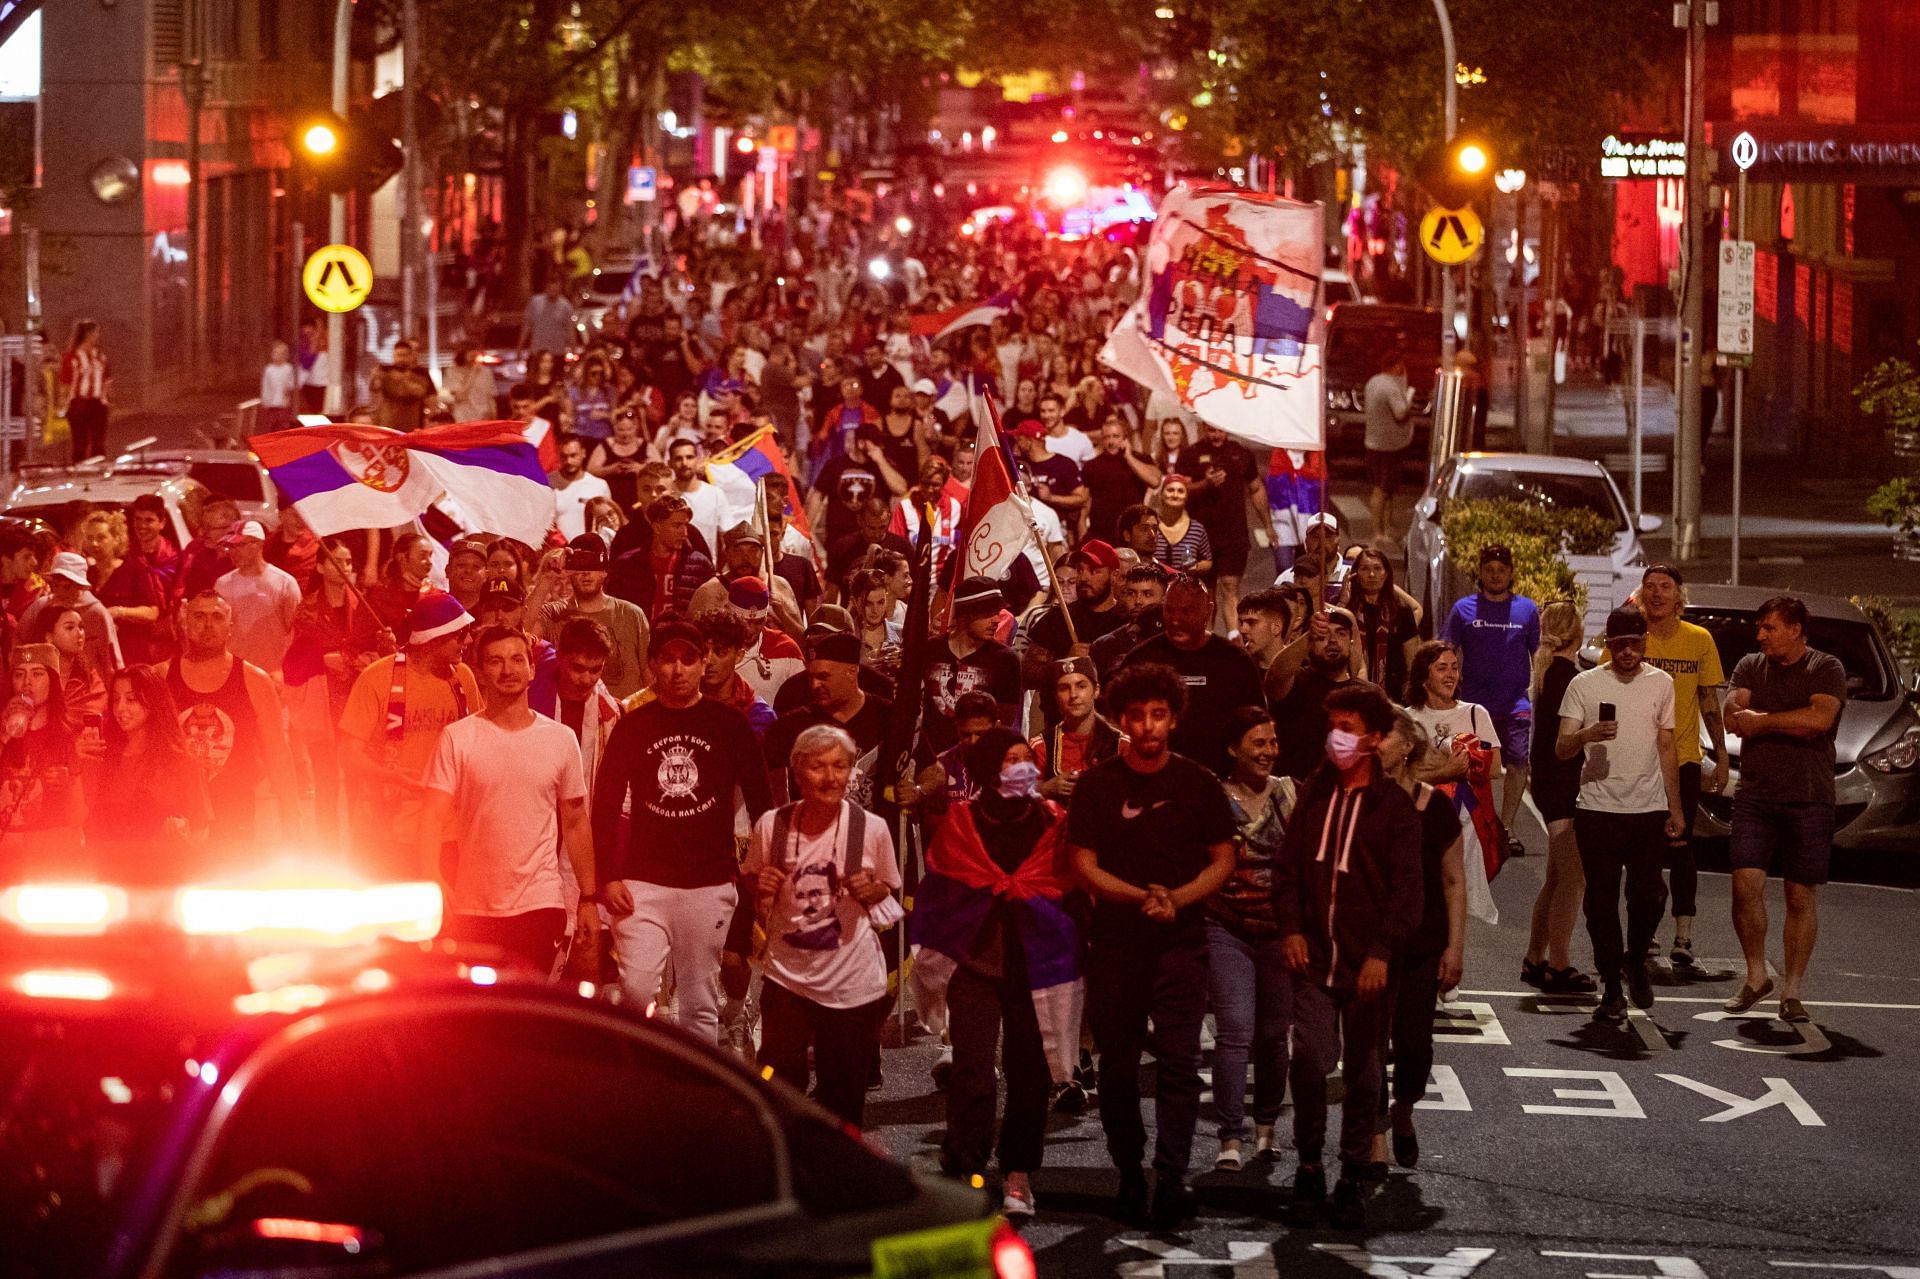 Serbian fans march on Collins Street